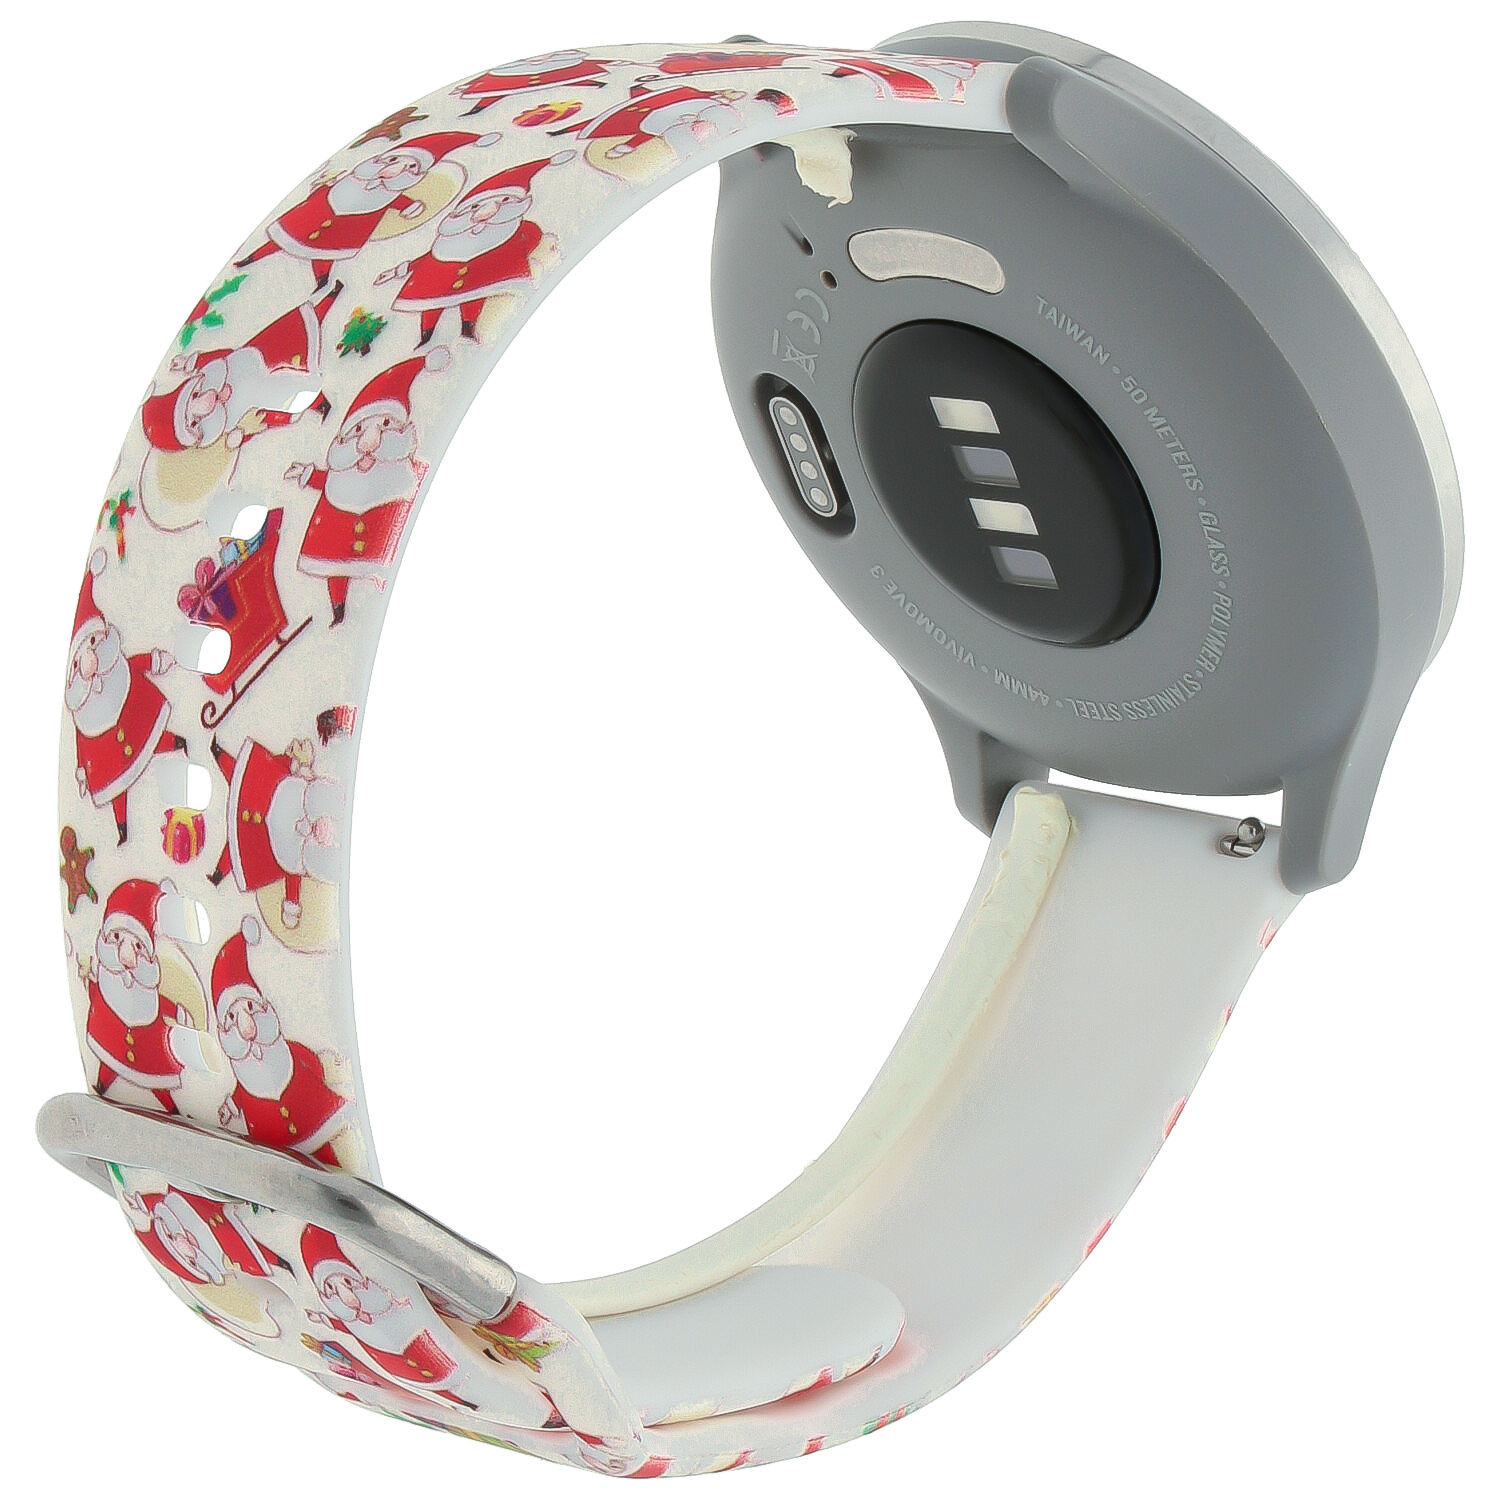 Huawei Watch druck Sportarmband - Weihnachtsmann rot